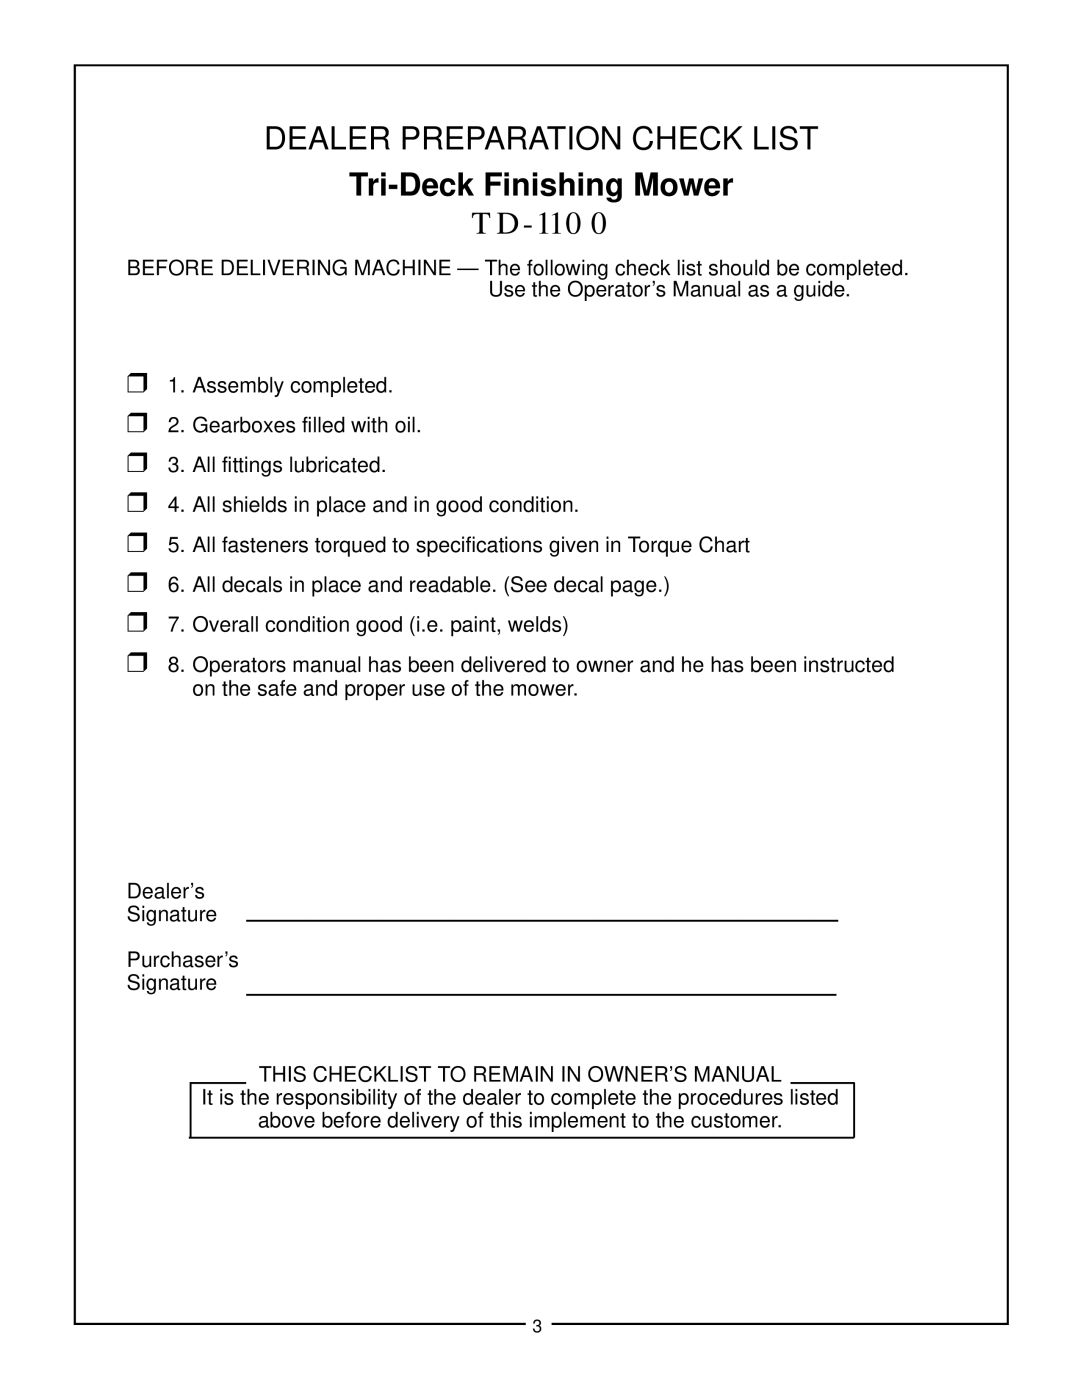 Bush Hog TD-1100 manual Tri-DeckFinishing Mower, Dealer Preparation Check List 